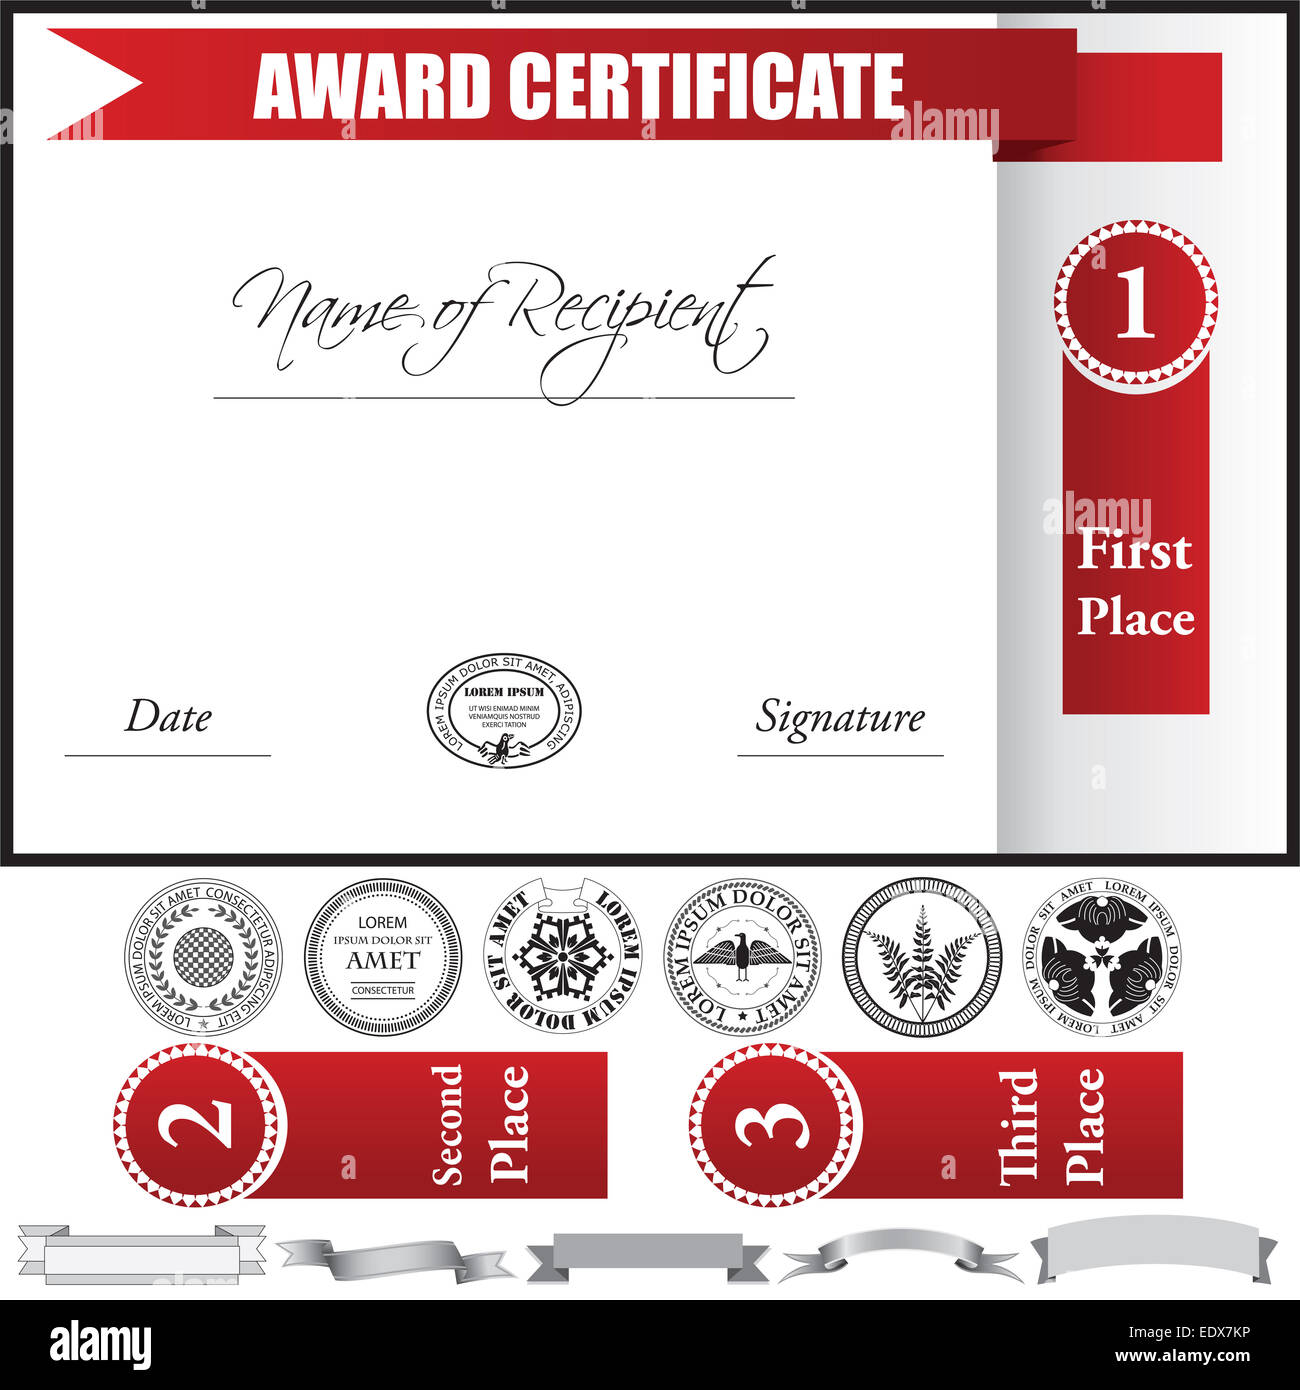 Award Certificate Template Stock Photo